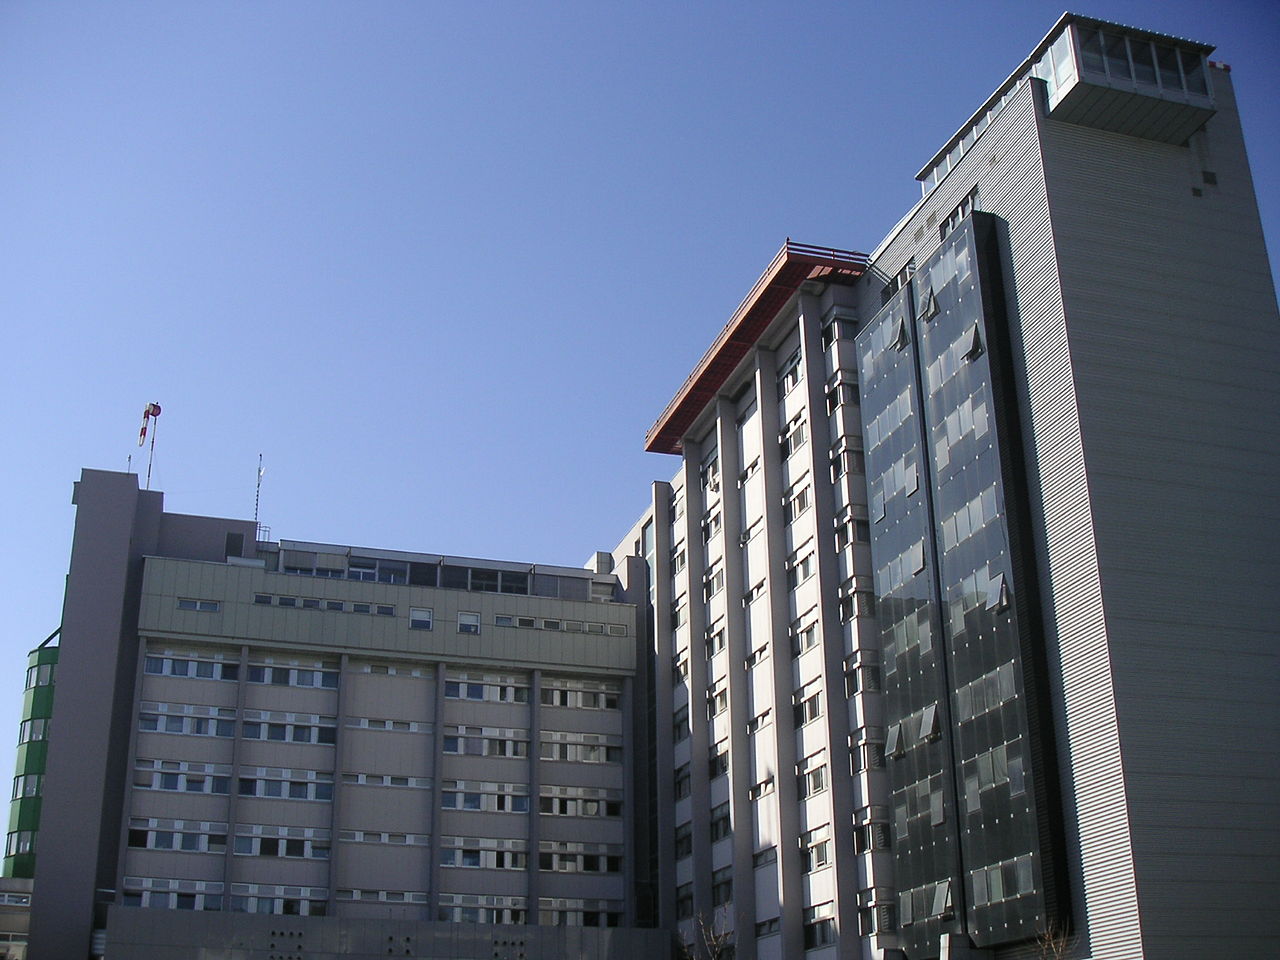 Hospital graz surgical tower